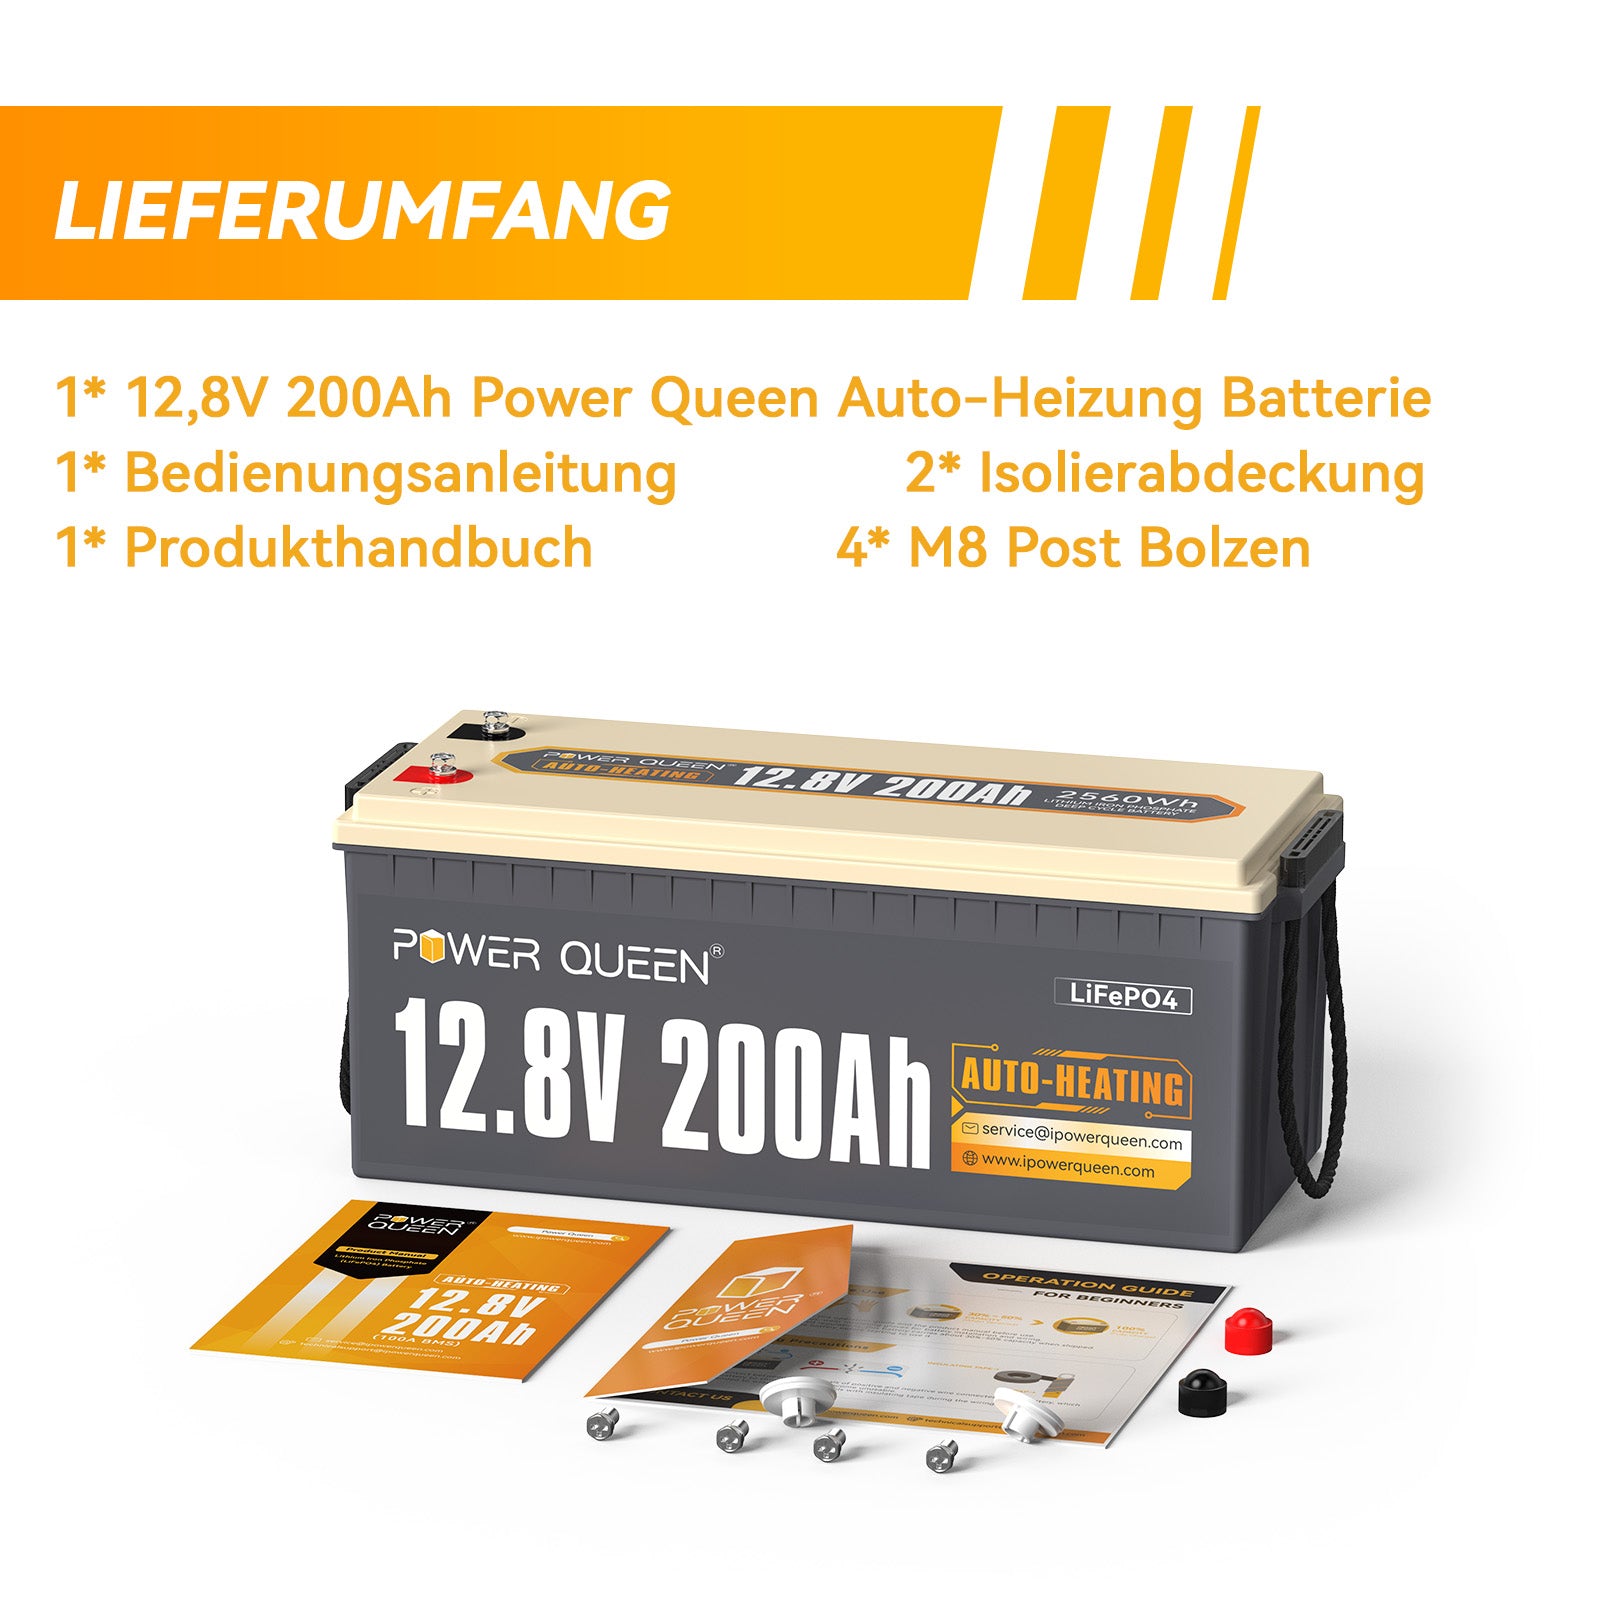 【TVA 0%】 Batterie LiFePO4 auto-chauffante Power Queen 12,8 V 200 Ah, BMS 100 A intégré